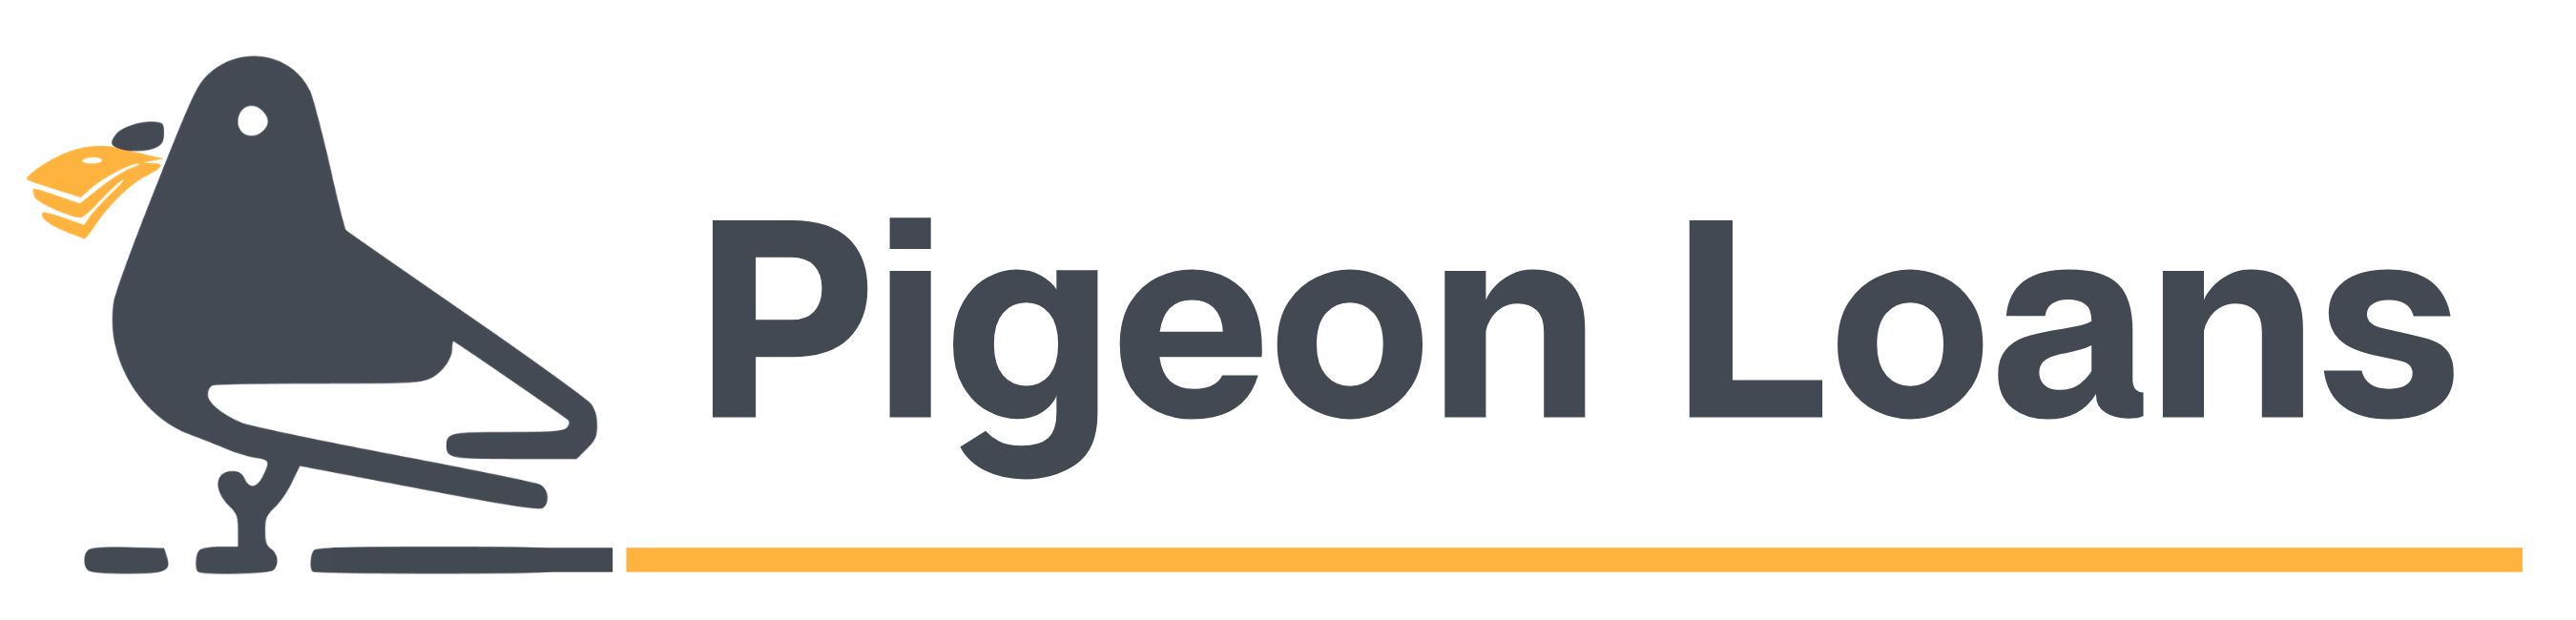 Pigeon Loans Logo